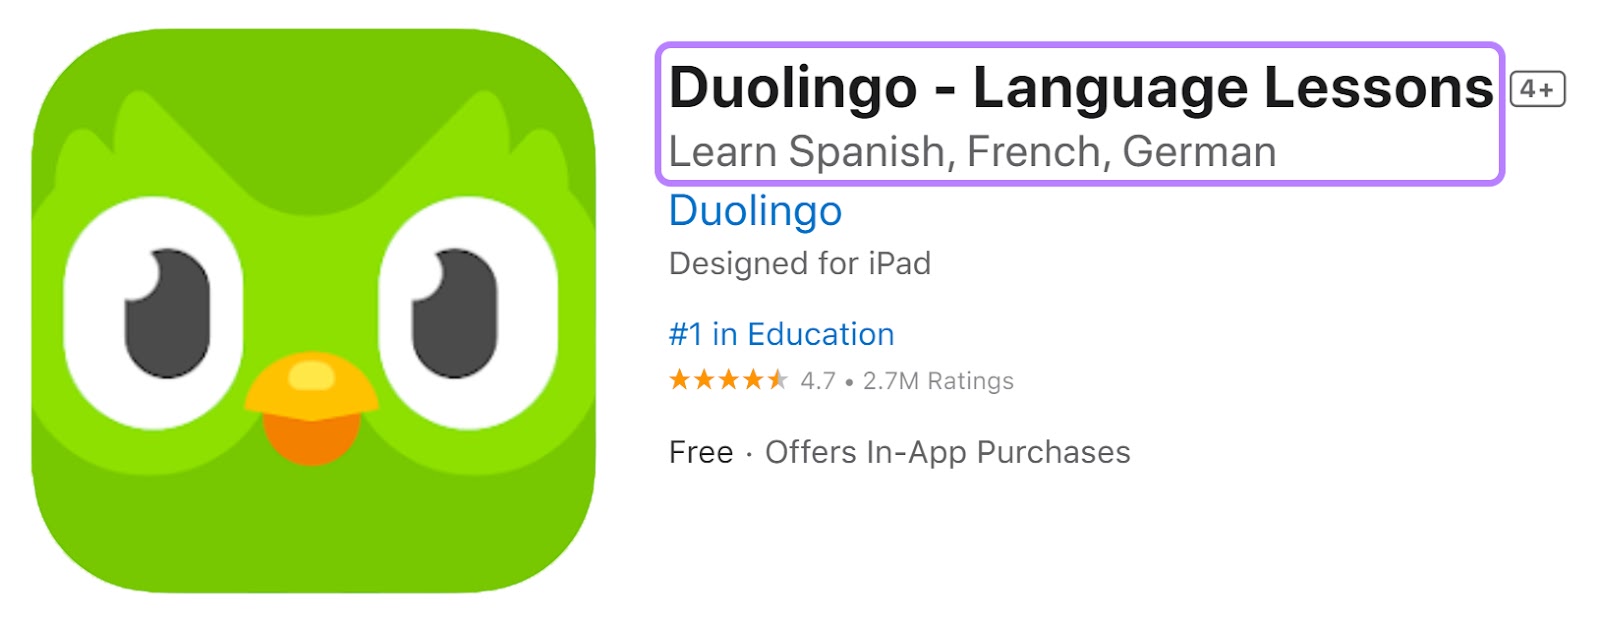 Duolingo's app rubric  and subtitle that work   "Duolingo - Language Lessons" "Learn Spanish, French, German"